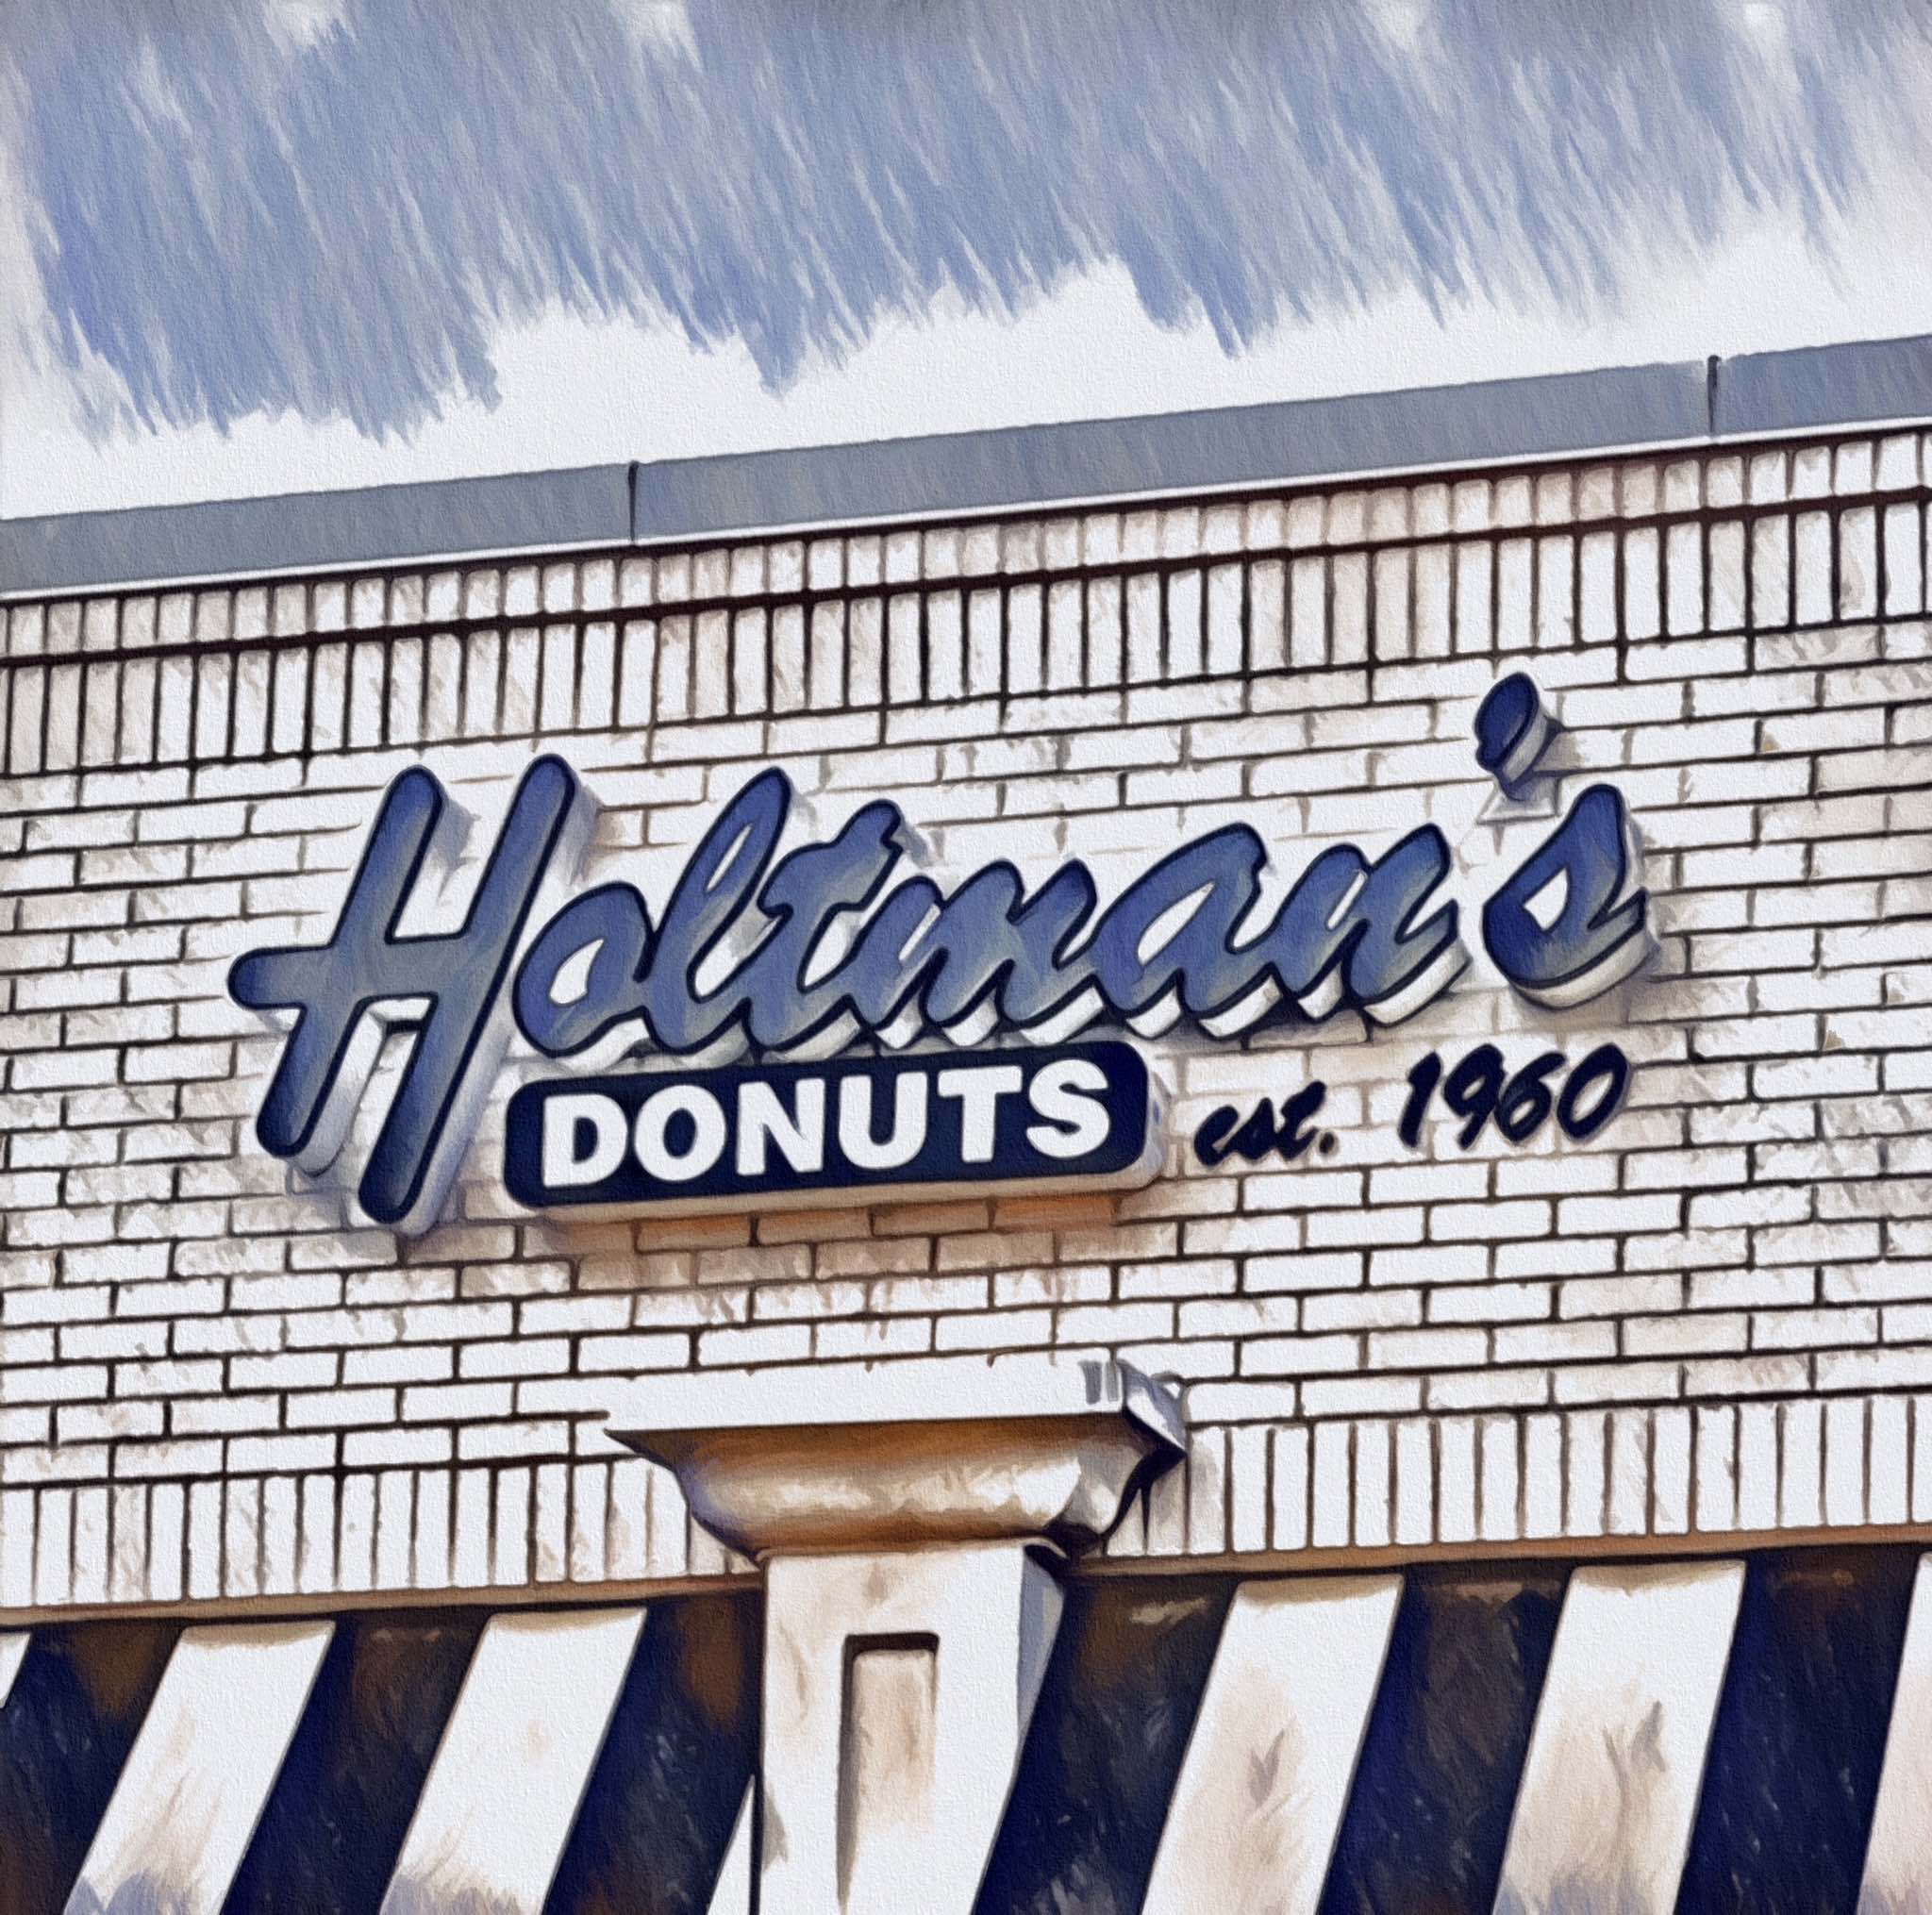 Katie Plazarin Holtman’s Donuts Cincinnati Ohio – Culinary Treasure Podcast Episode 72 by Steven Shomler 